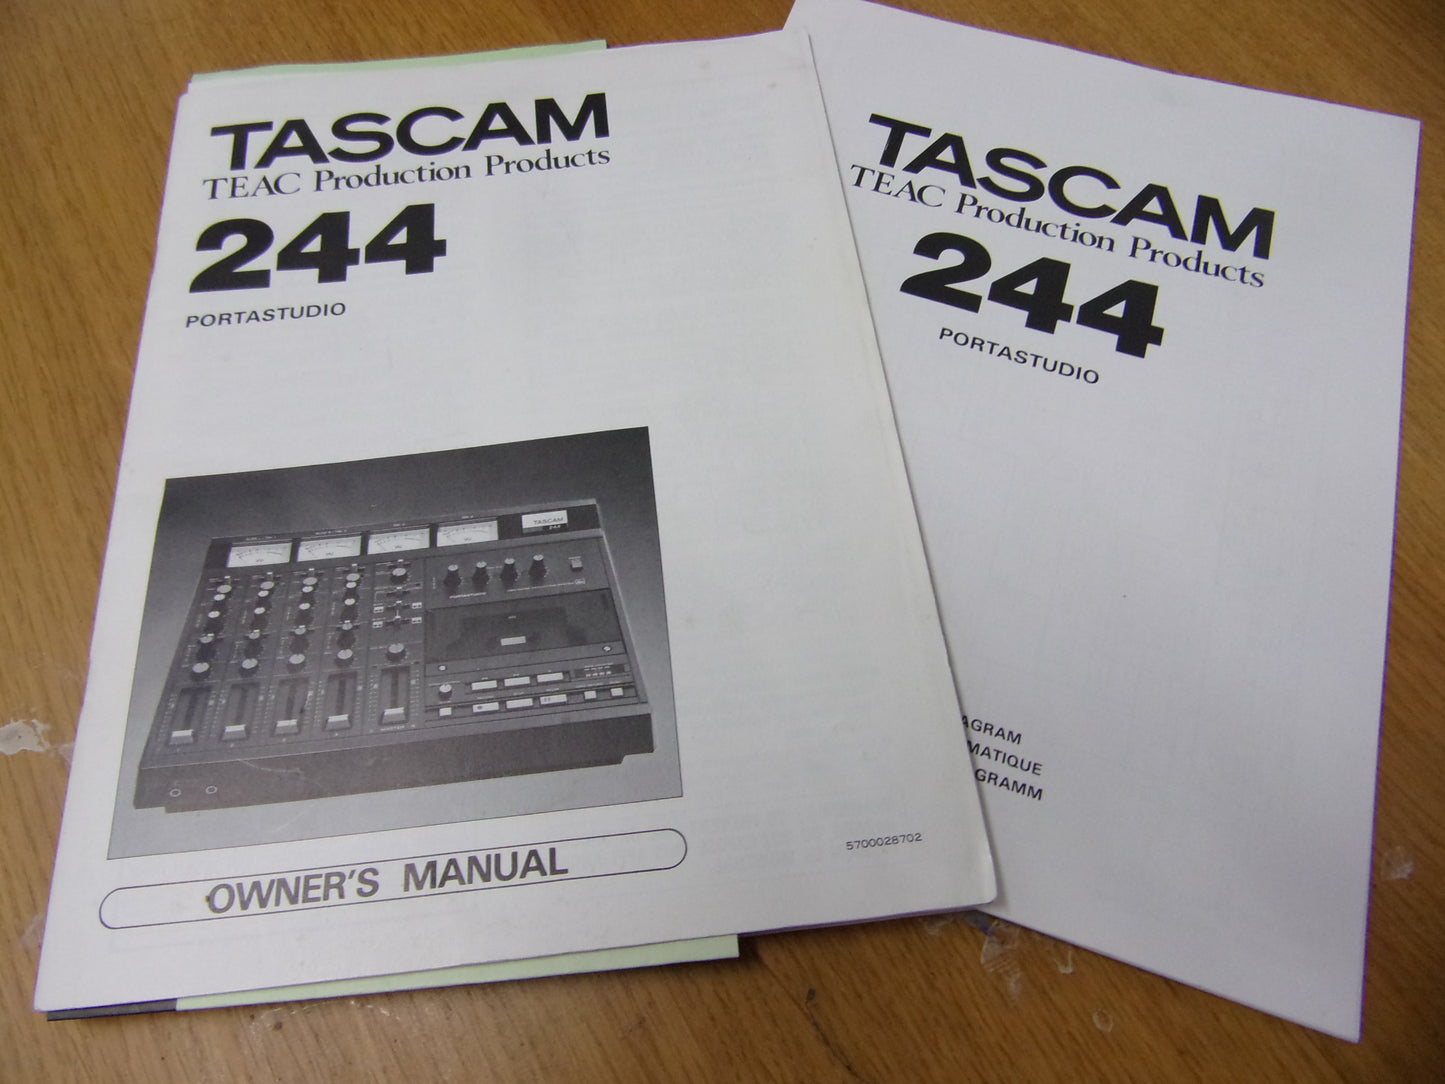 Tascam 244 Portastudio owners manual and circuits